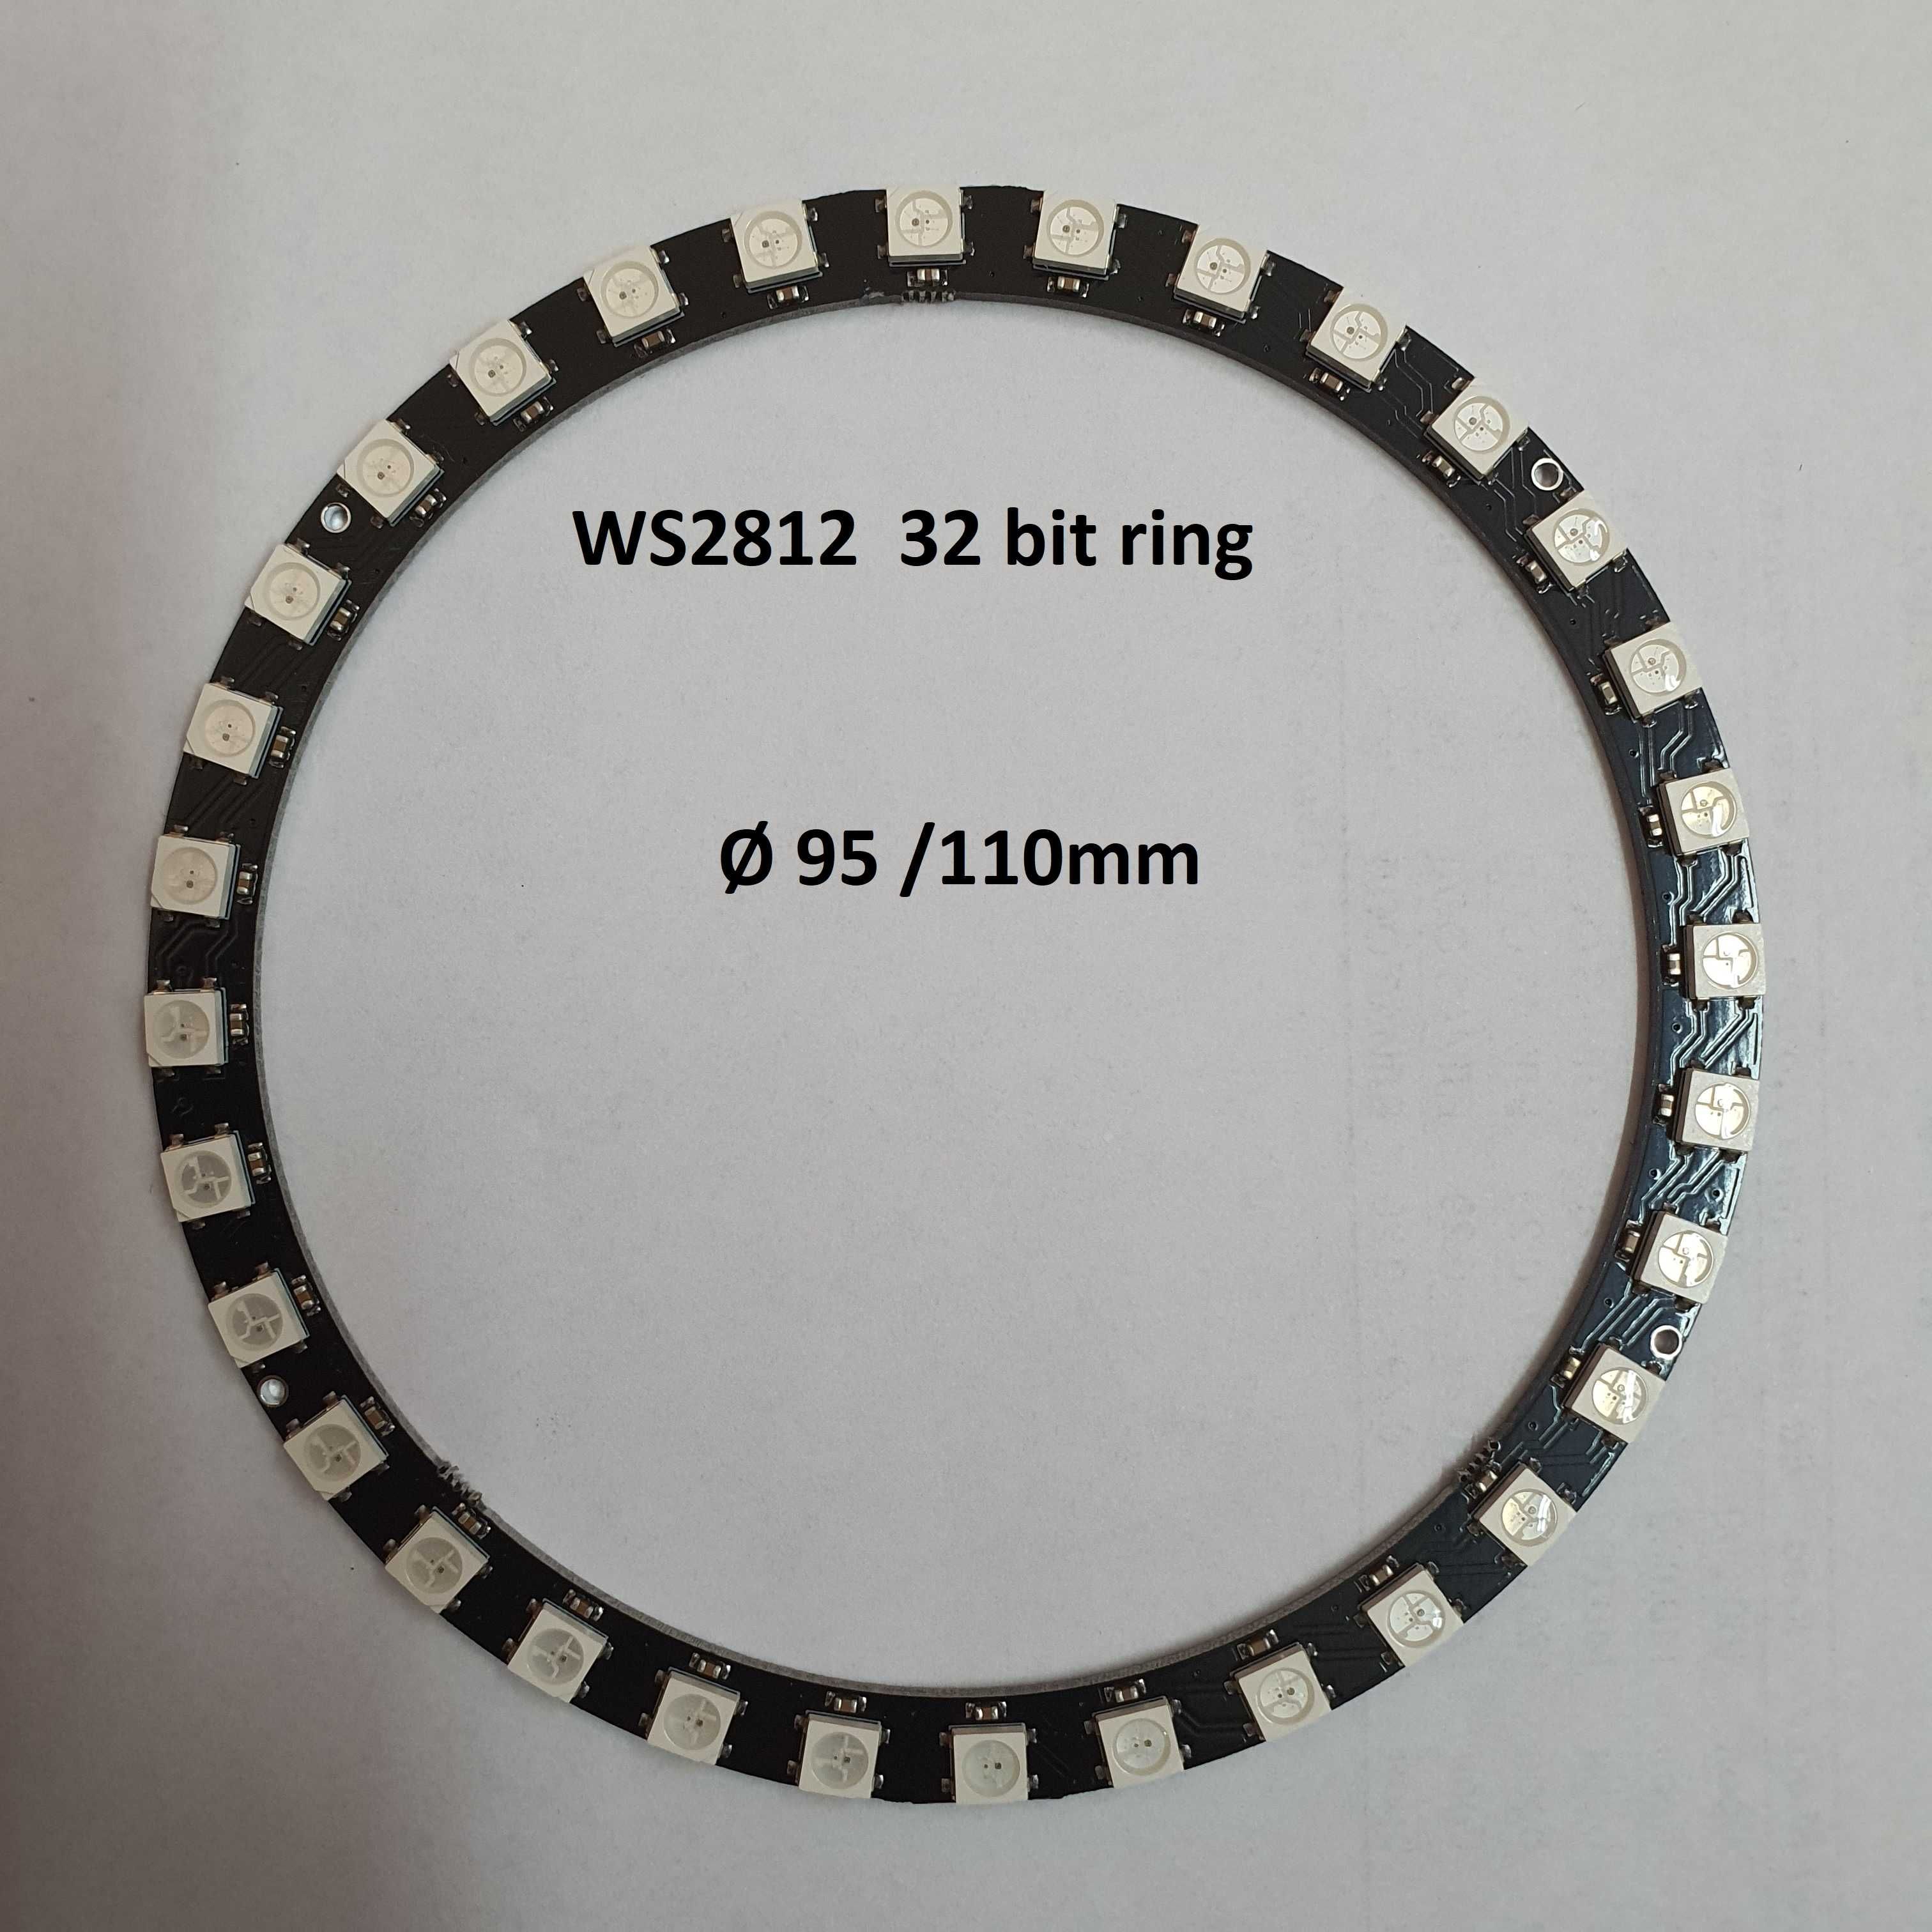 WS2812 Led strip, 8bit, Ring: 8,16,24,32 bit, matrix: 8x8, 8x32, 16x16